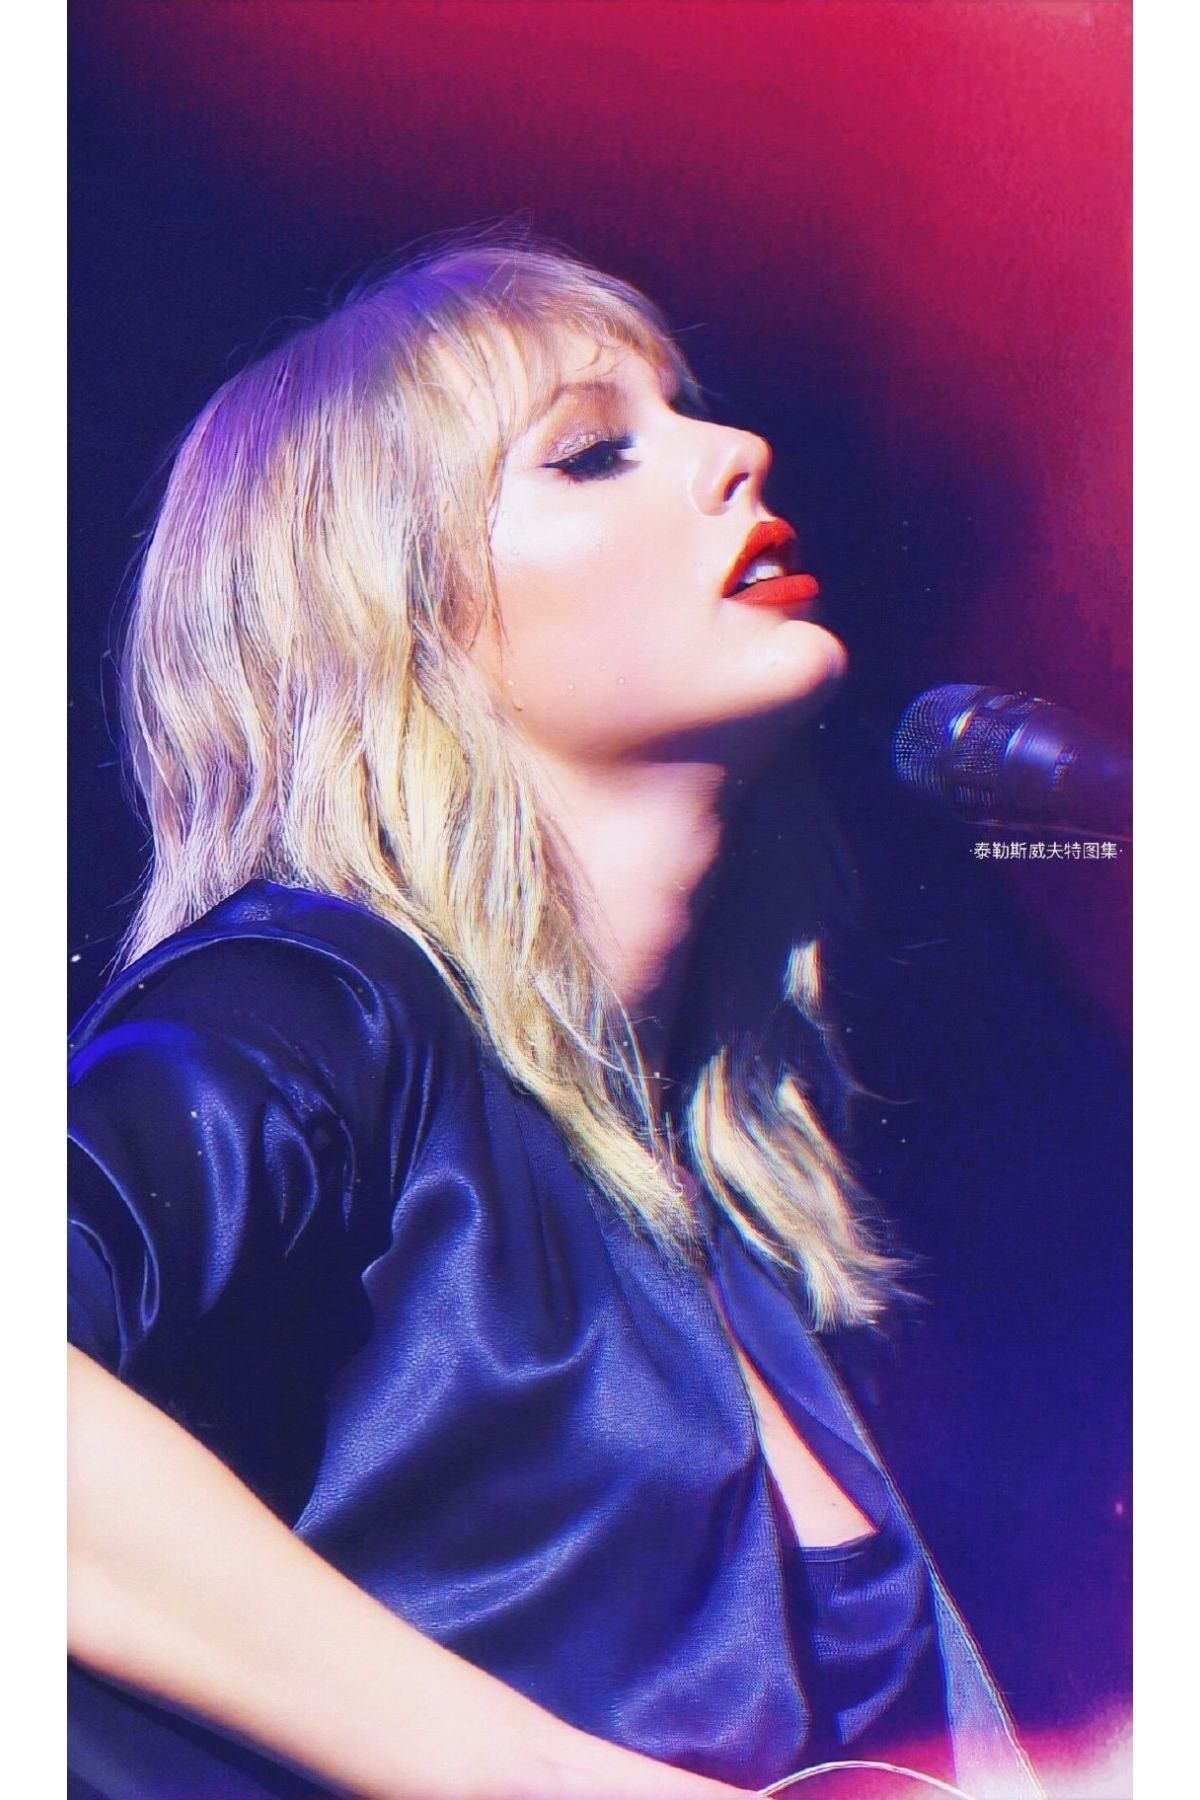 Genel Markalar Taylor Swift Poster A5 Boyut 15 X 21 Cm Dijital Baskı 200 Gr Parlak Kuşe Kağıt Parlak